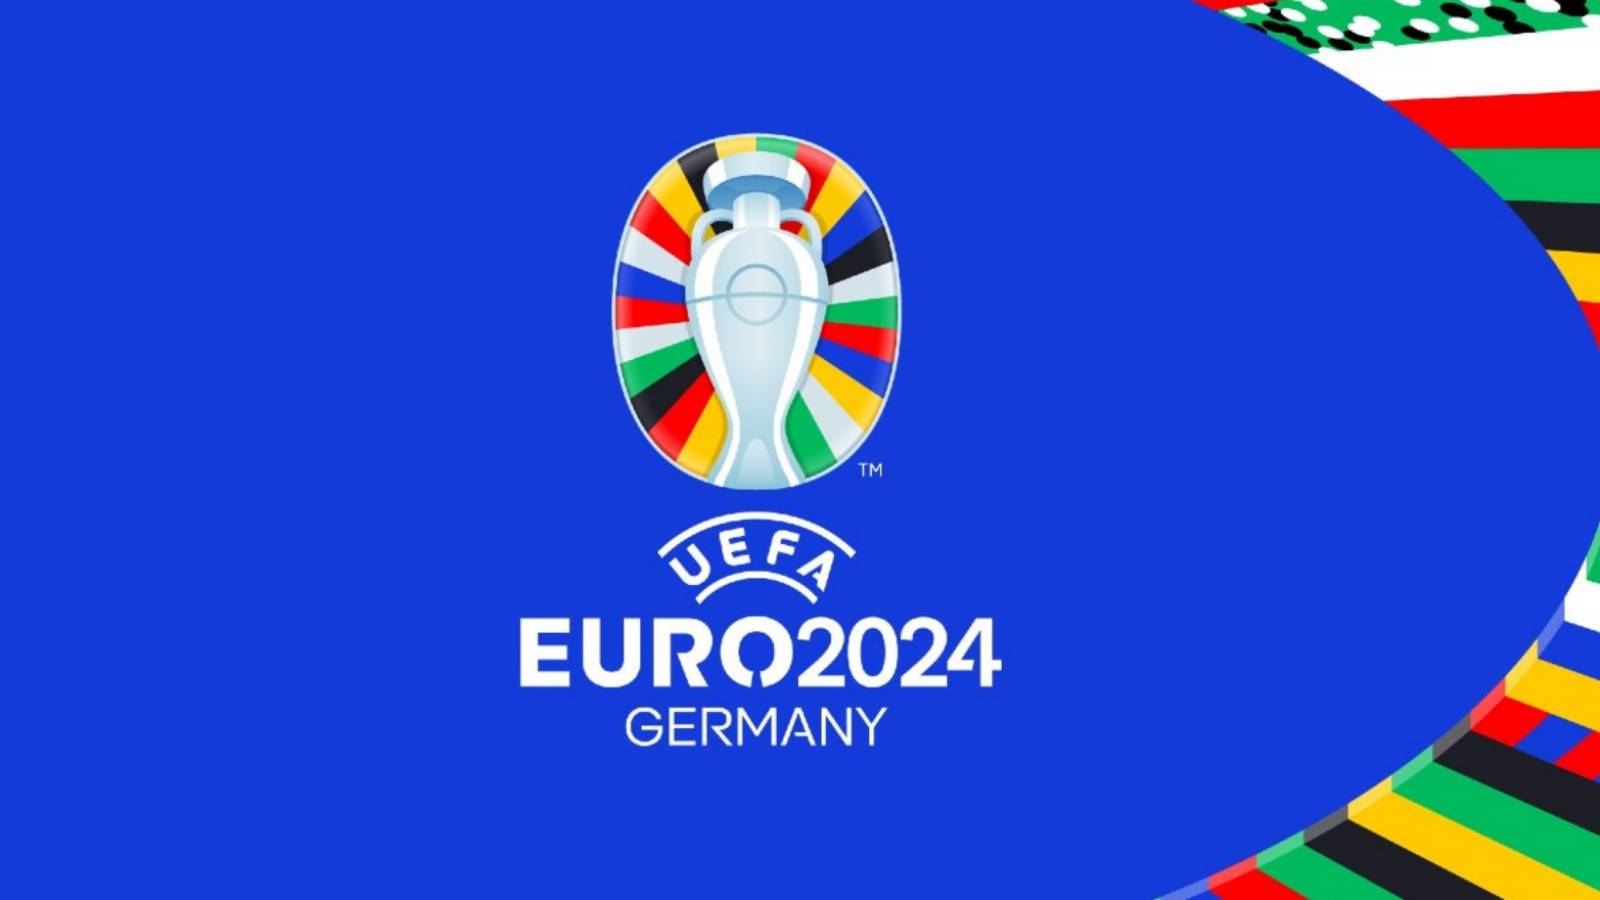 EURO 2024 TREK LIVE Roemenië Groep Europees voetbalkampioenschap 2024